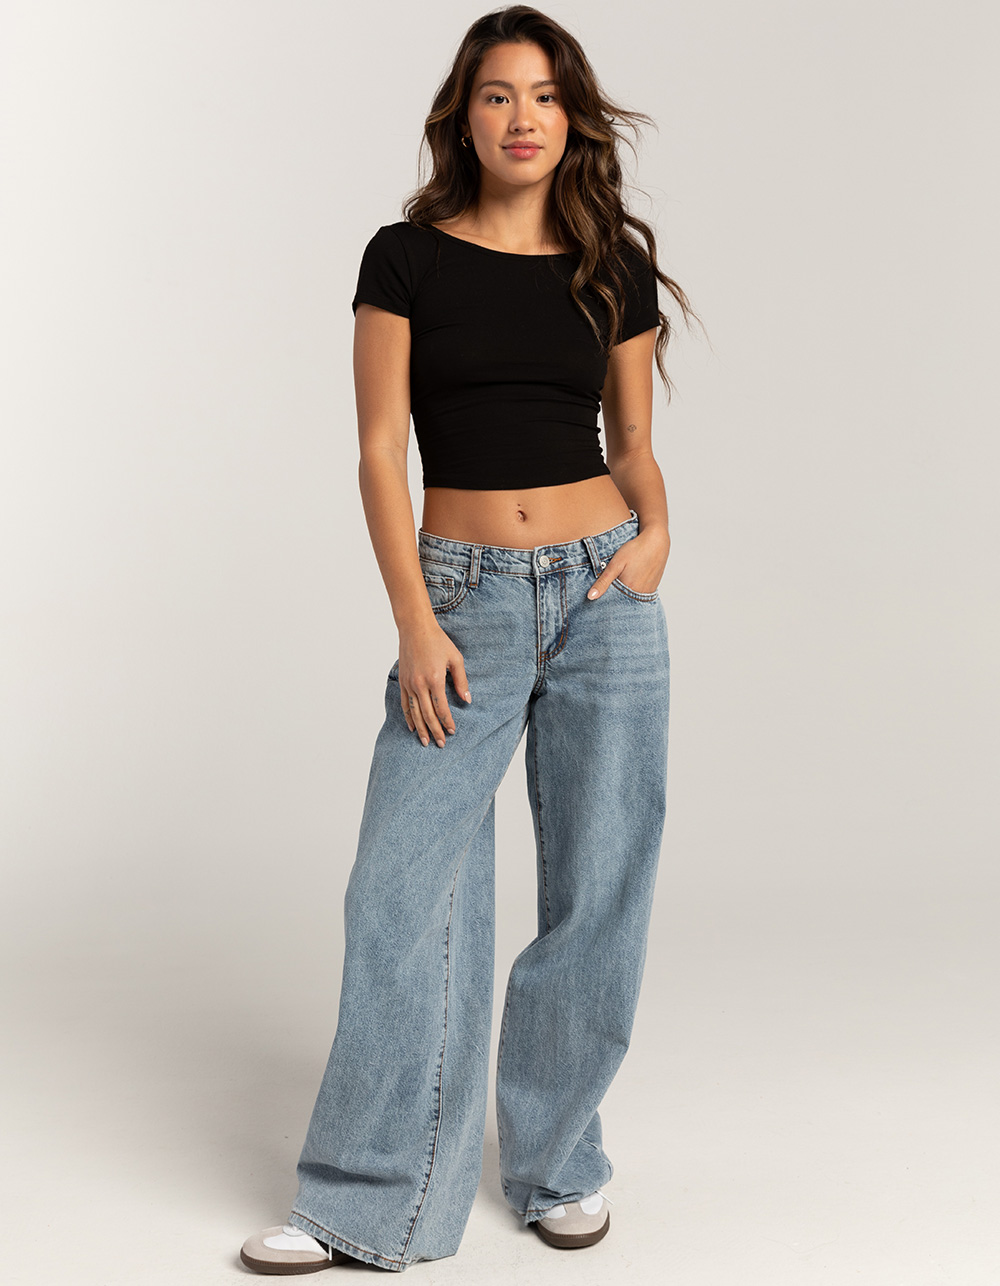 Rsq rsq womens jeans - Gem